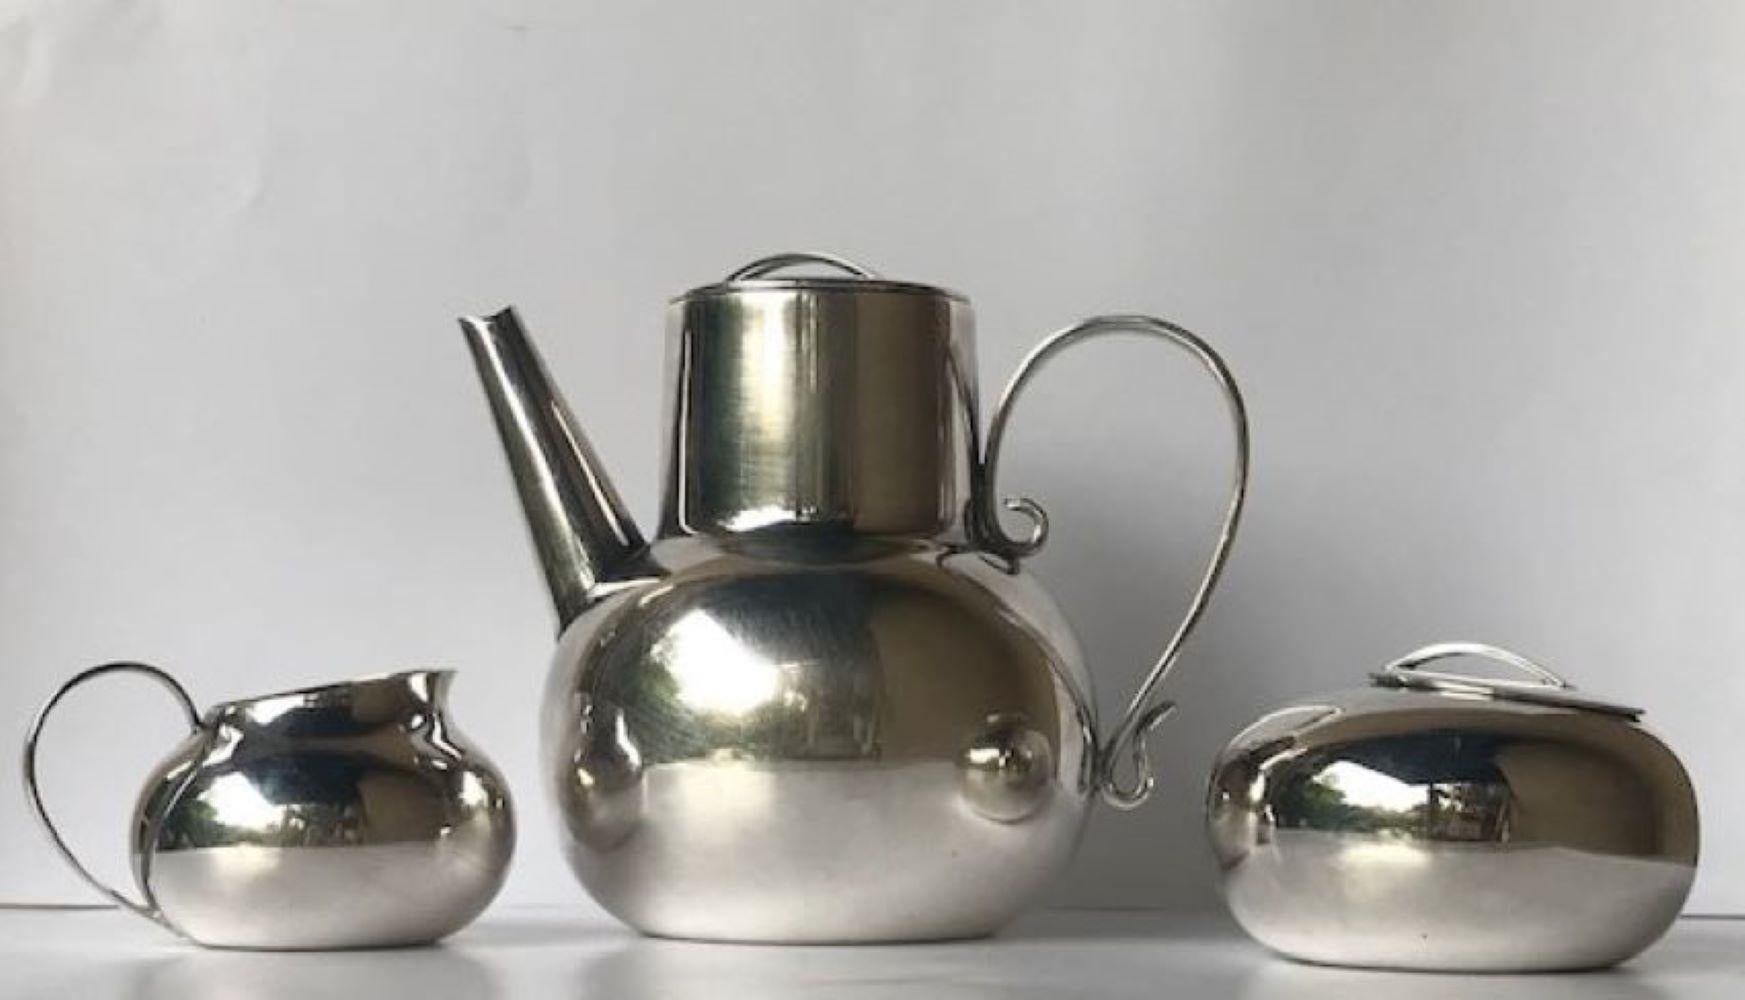 Metalwork Mid-Century Modern Coffee Set Designed by Lino Sabattini for Christofle c. 1950s